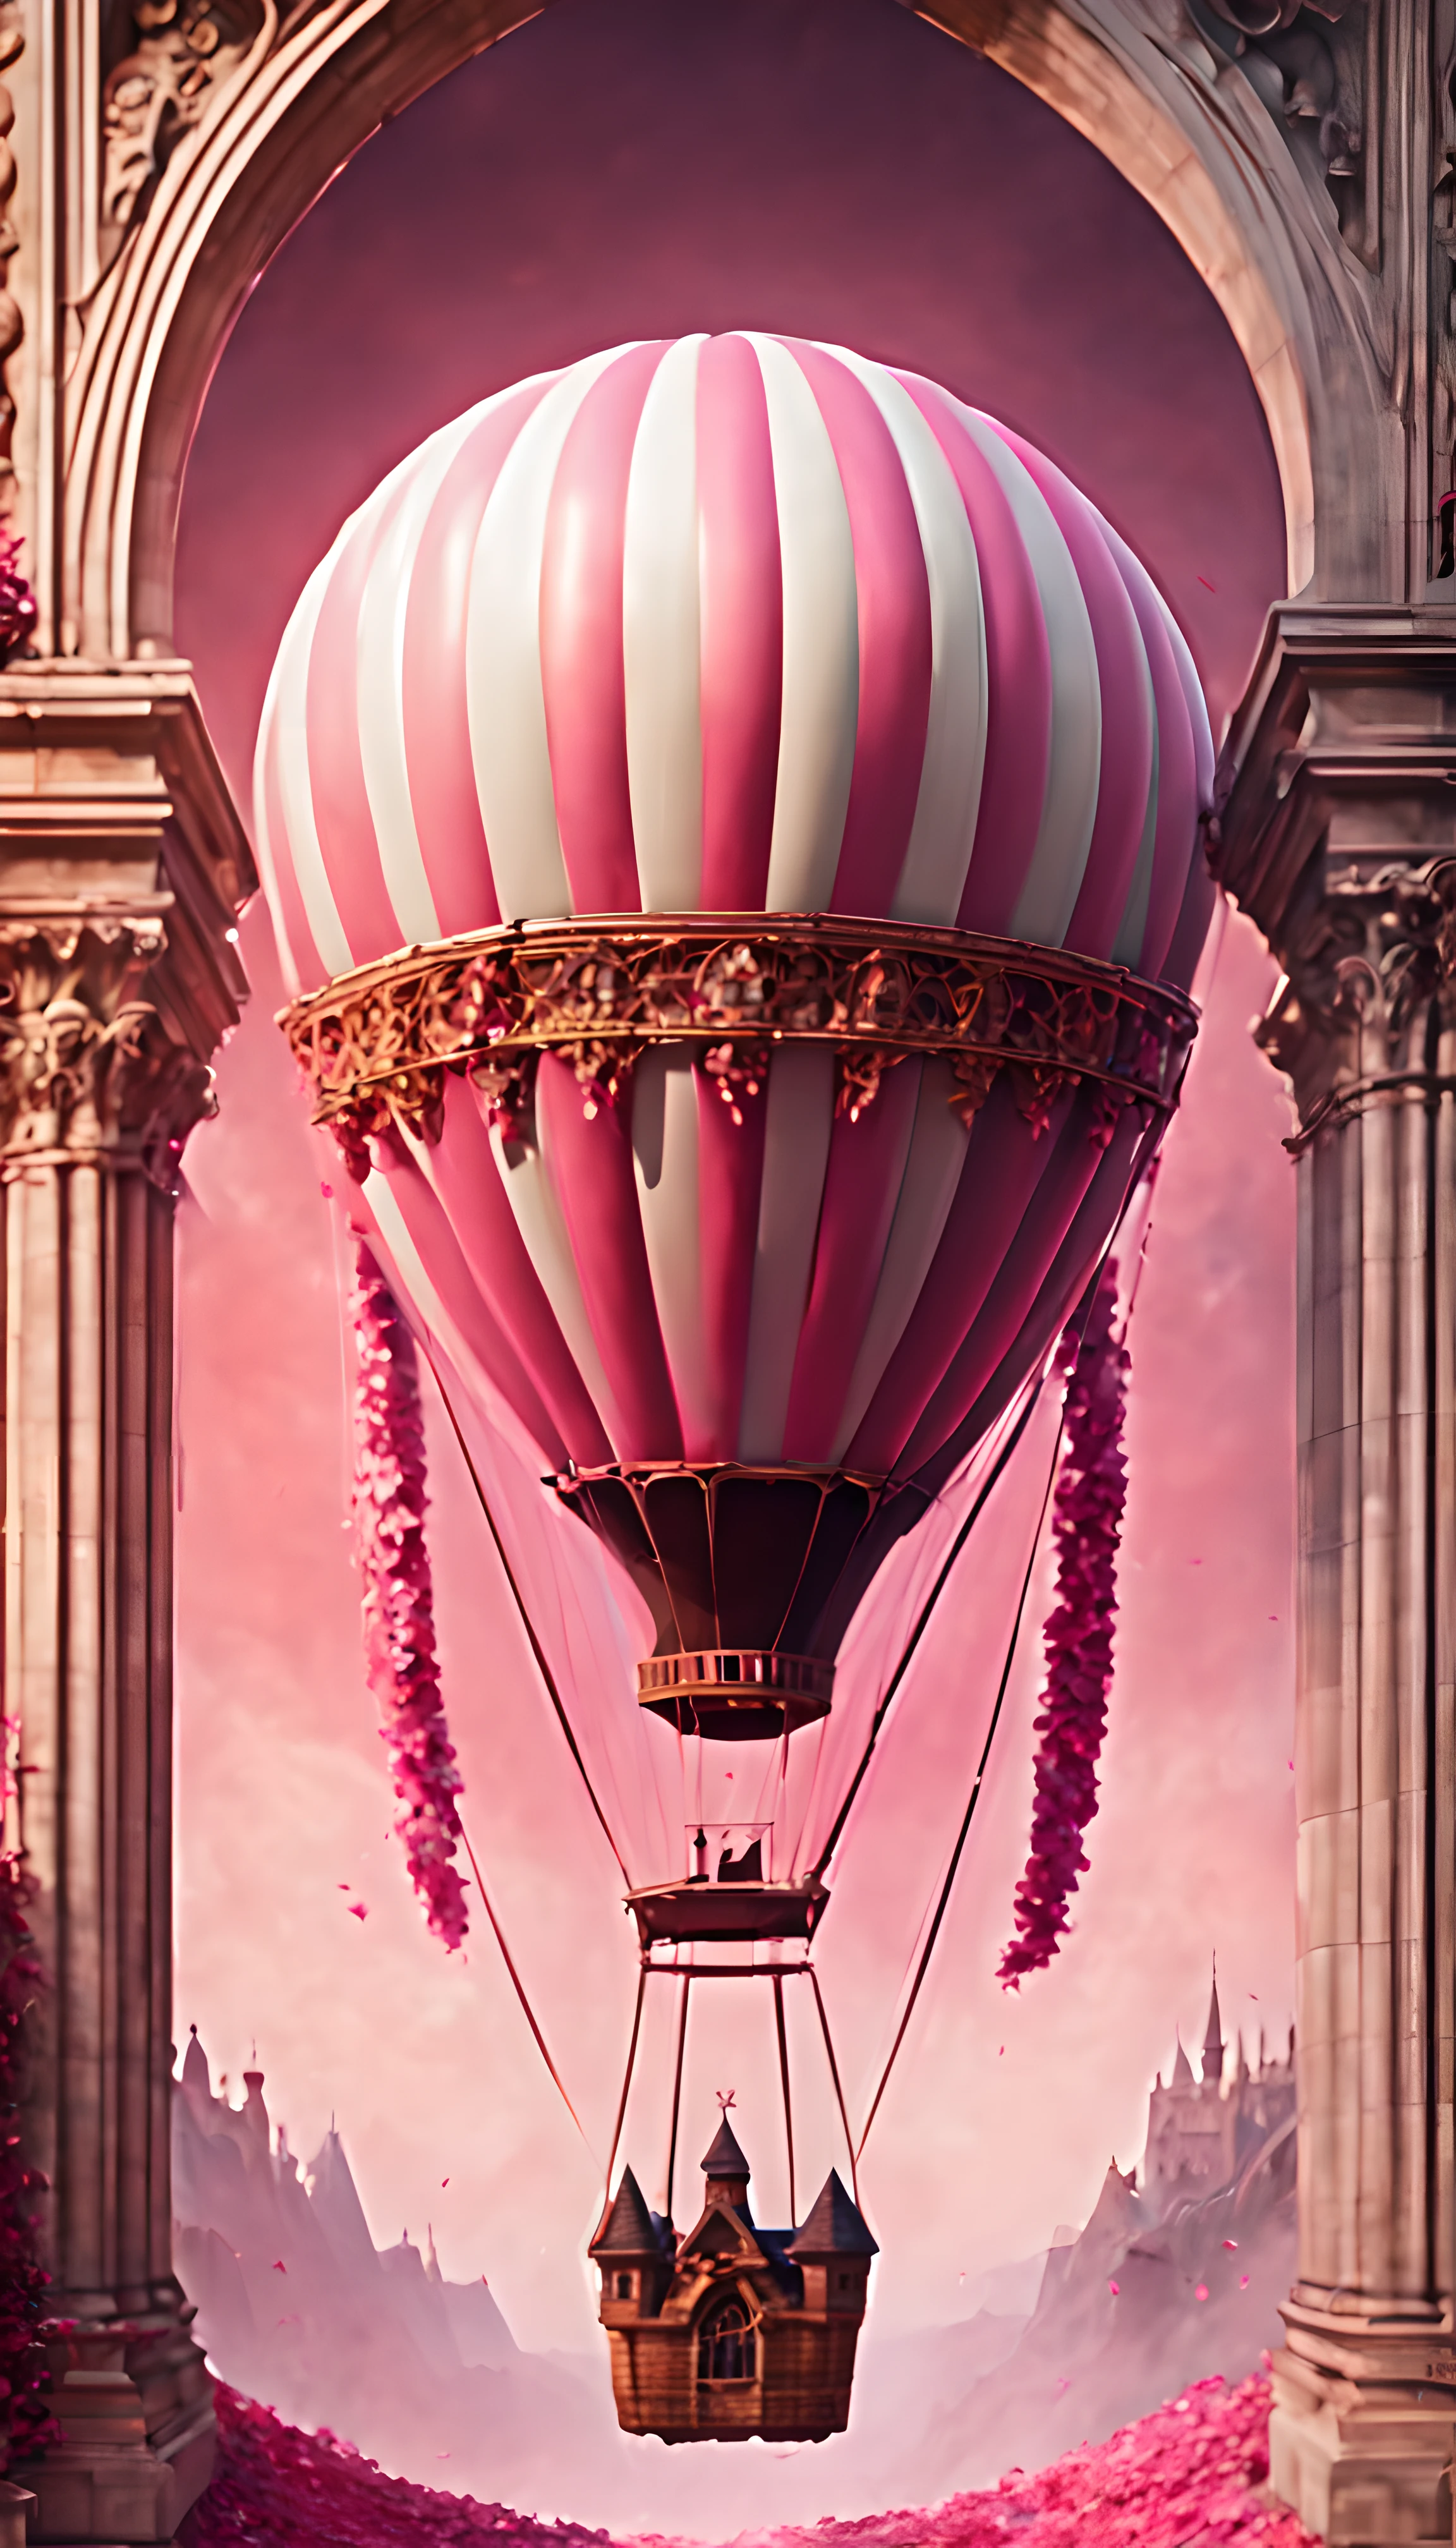 masterpiece, best quality, (epic, absurd, elegant) (big hot air balloon inside an elegant gothic arc:1.3), (falling romantic flows of pink petals), summer, volumetric lighting